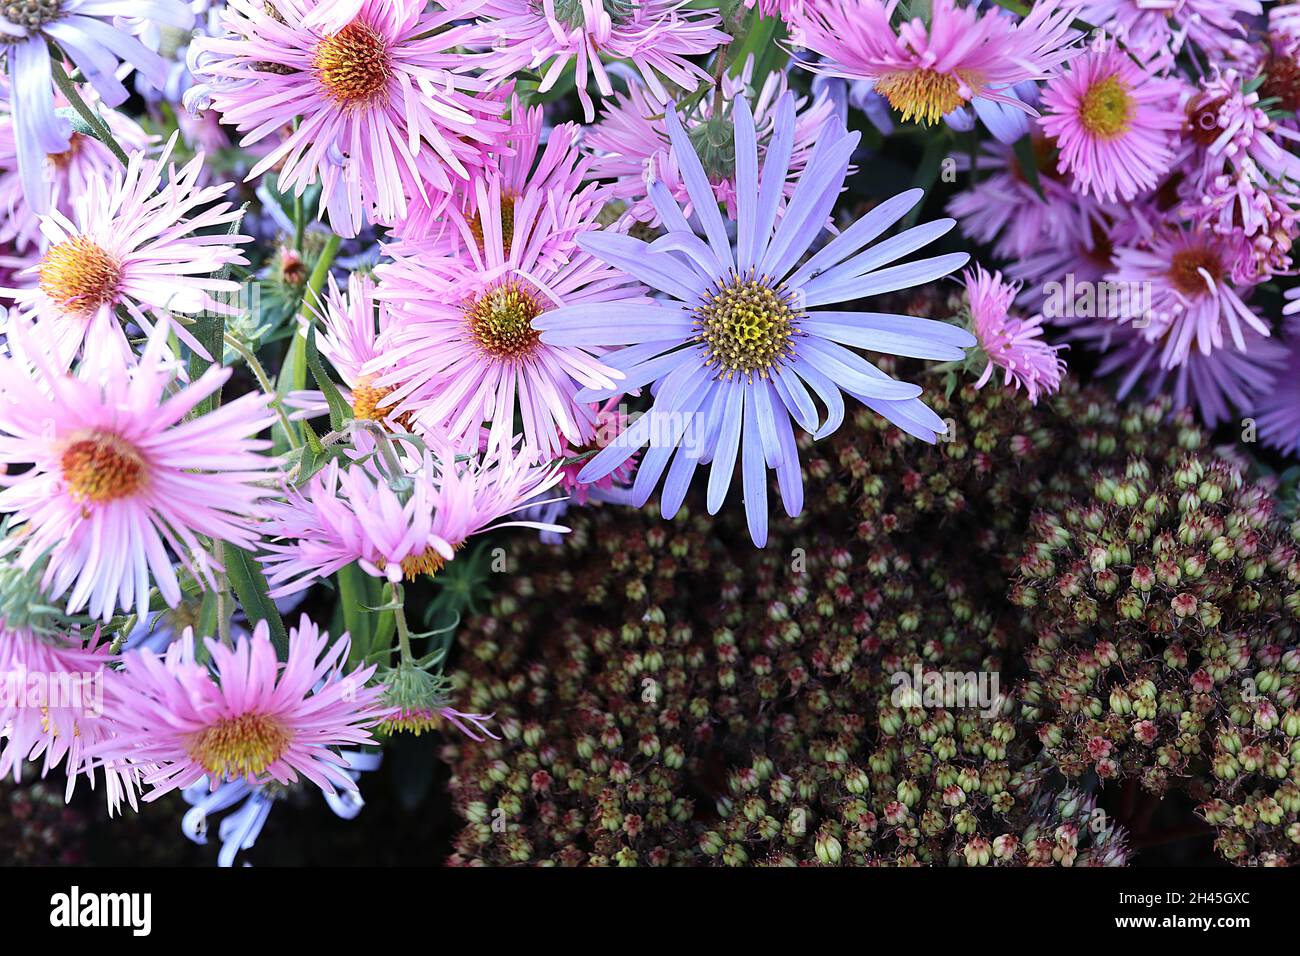 Symphyotrichum novae-angliae ‘Rosa Sieger’ New England Aster Rosa Sieger - doppelte hellrosa Blüten mit sehr schlanken Blütenblättern, Oktober, England, UK Stockfoto